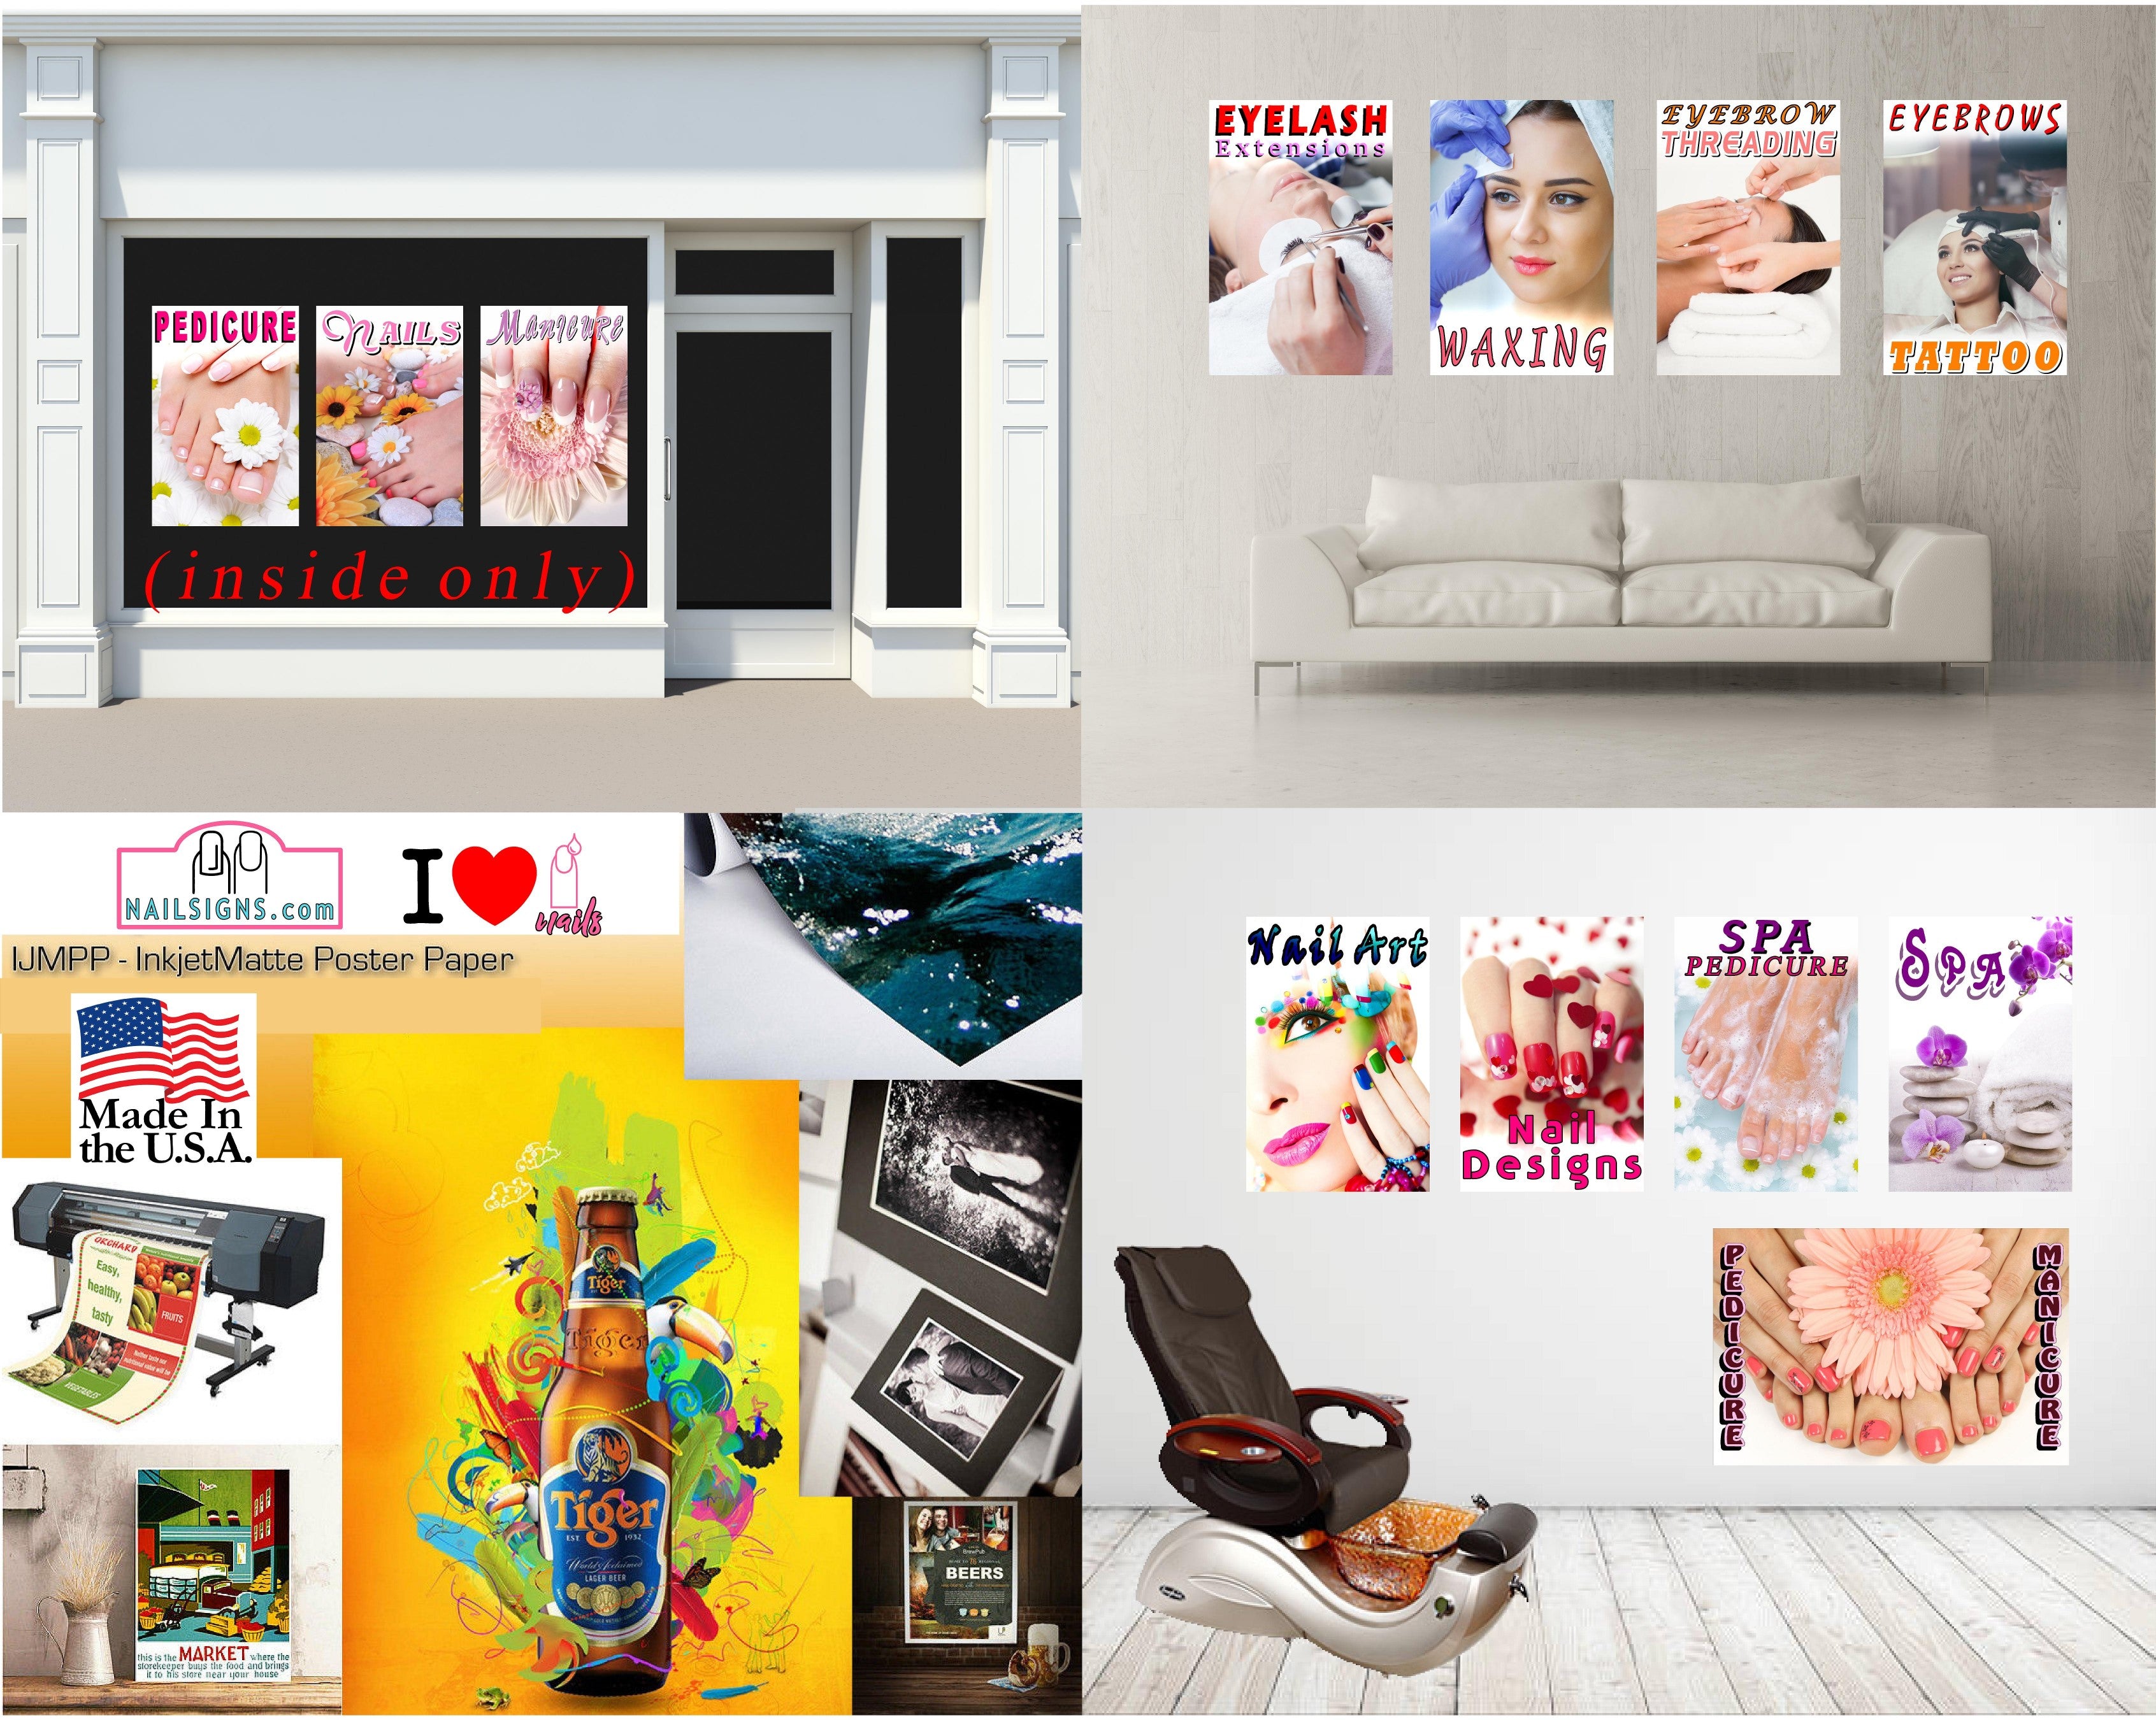 Pedicure & Manicure 04 Photo-Realistic Paper Poster Premium Matte Interior Inside Sign Adverting Marketing Wall Window Non-Laminated Horizontal